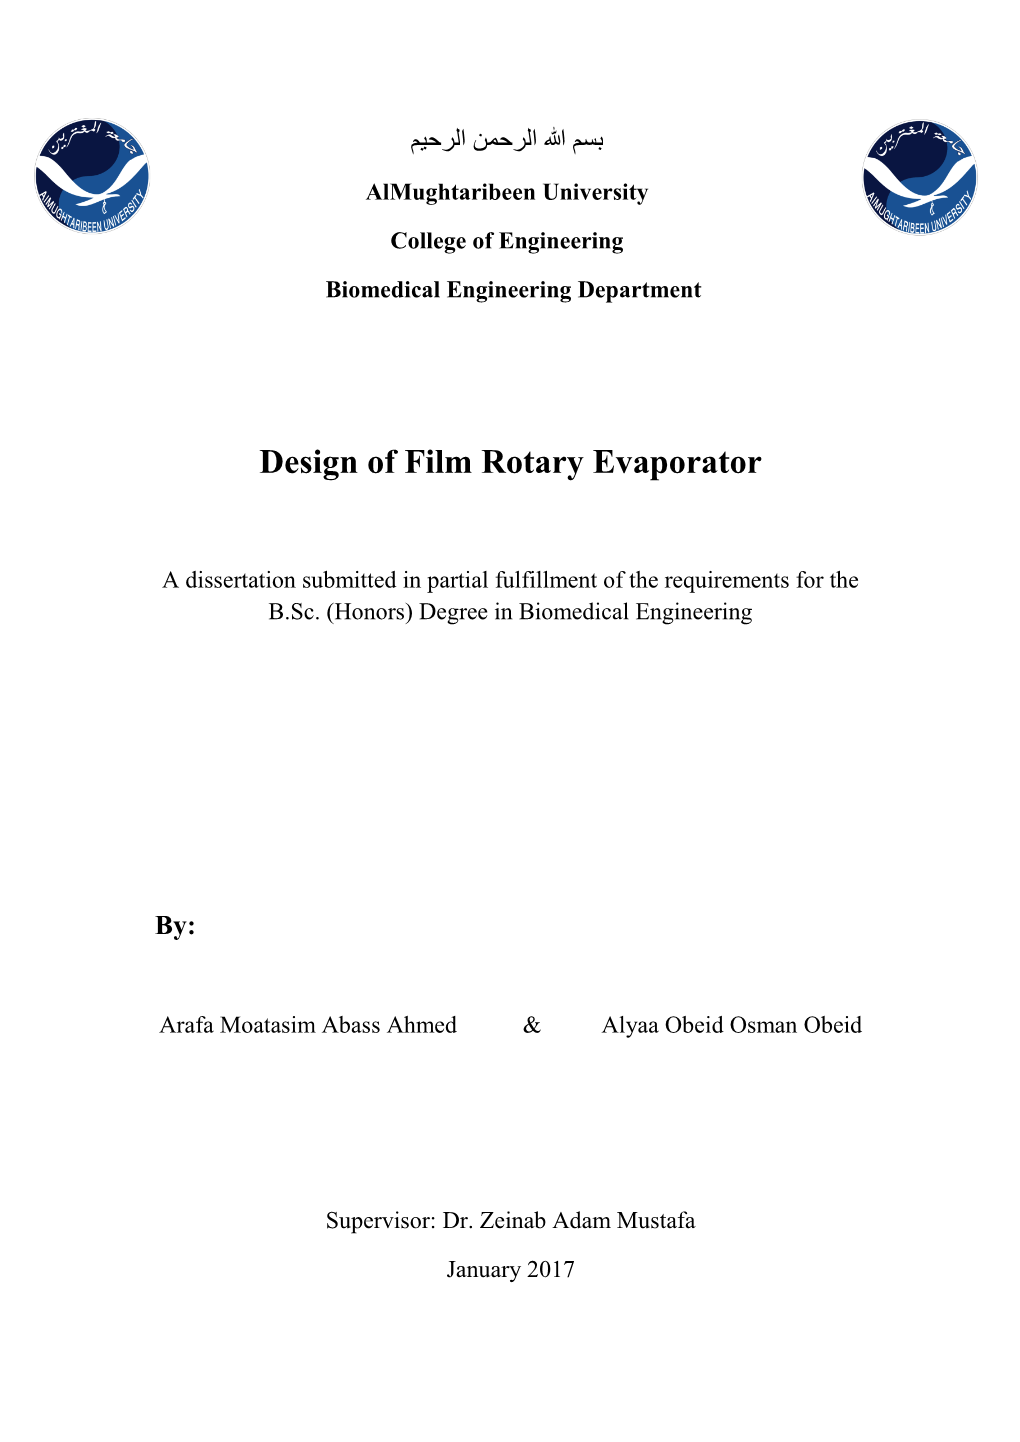 Design of Film Rotary Evaporator